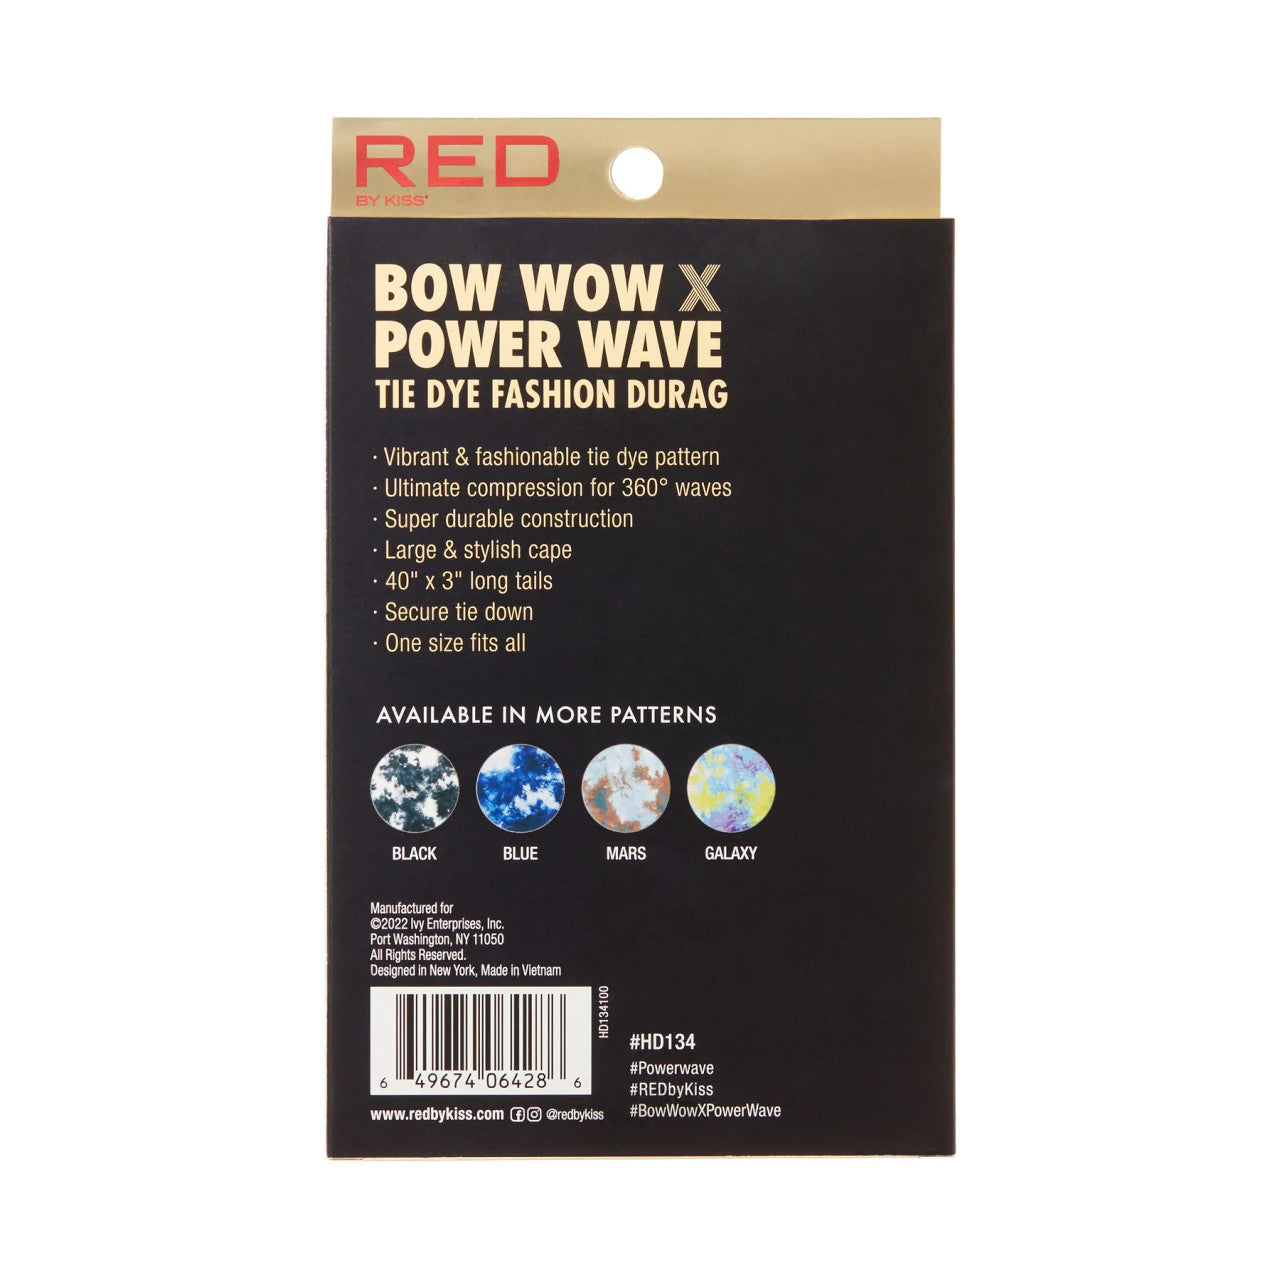 Red by Kiss BOW WOW X Power Wave Tie Dye Fashion Durag - Galaxy - HD134